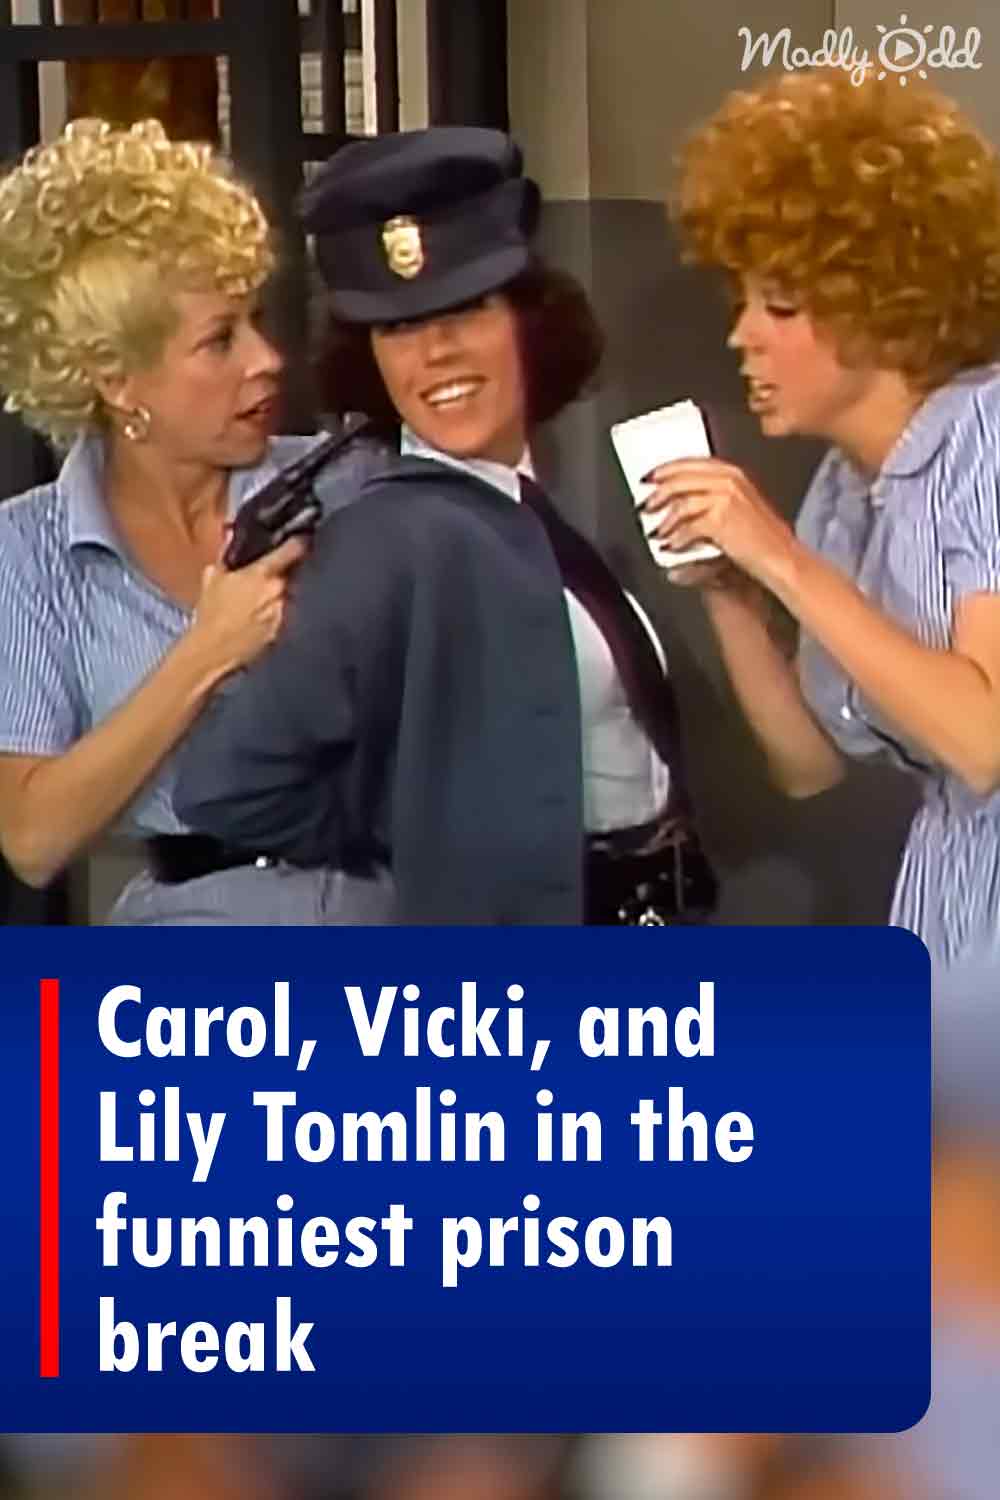 Carol, Vicki, and Lily Tomlin in the funniest prison break